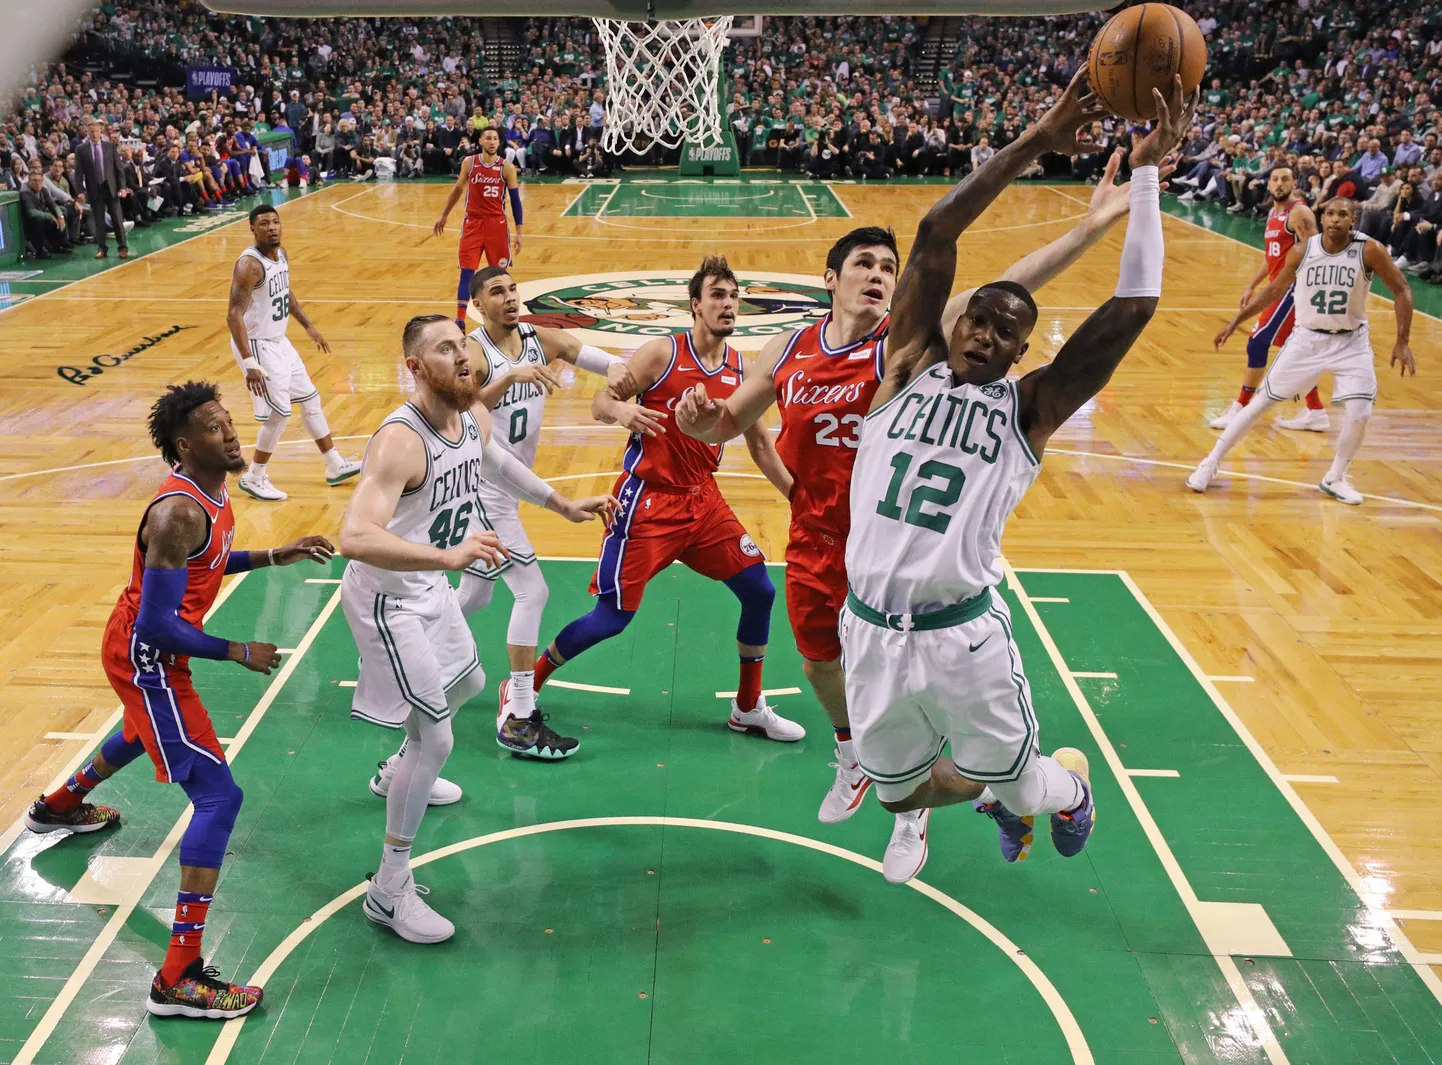 Boston Celtics - Philadelphia 76ers